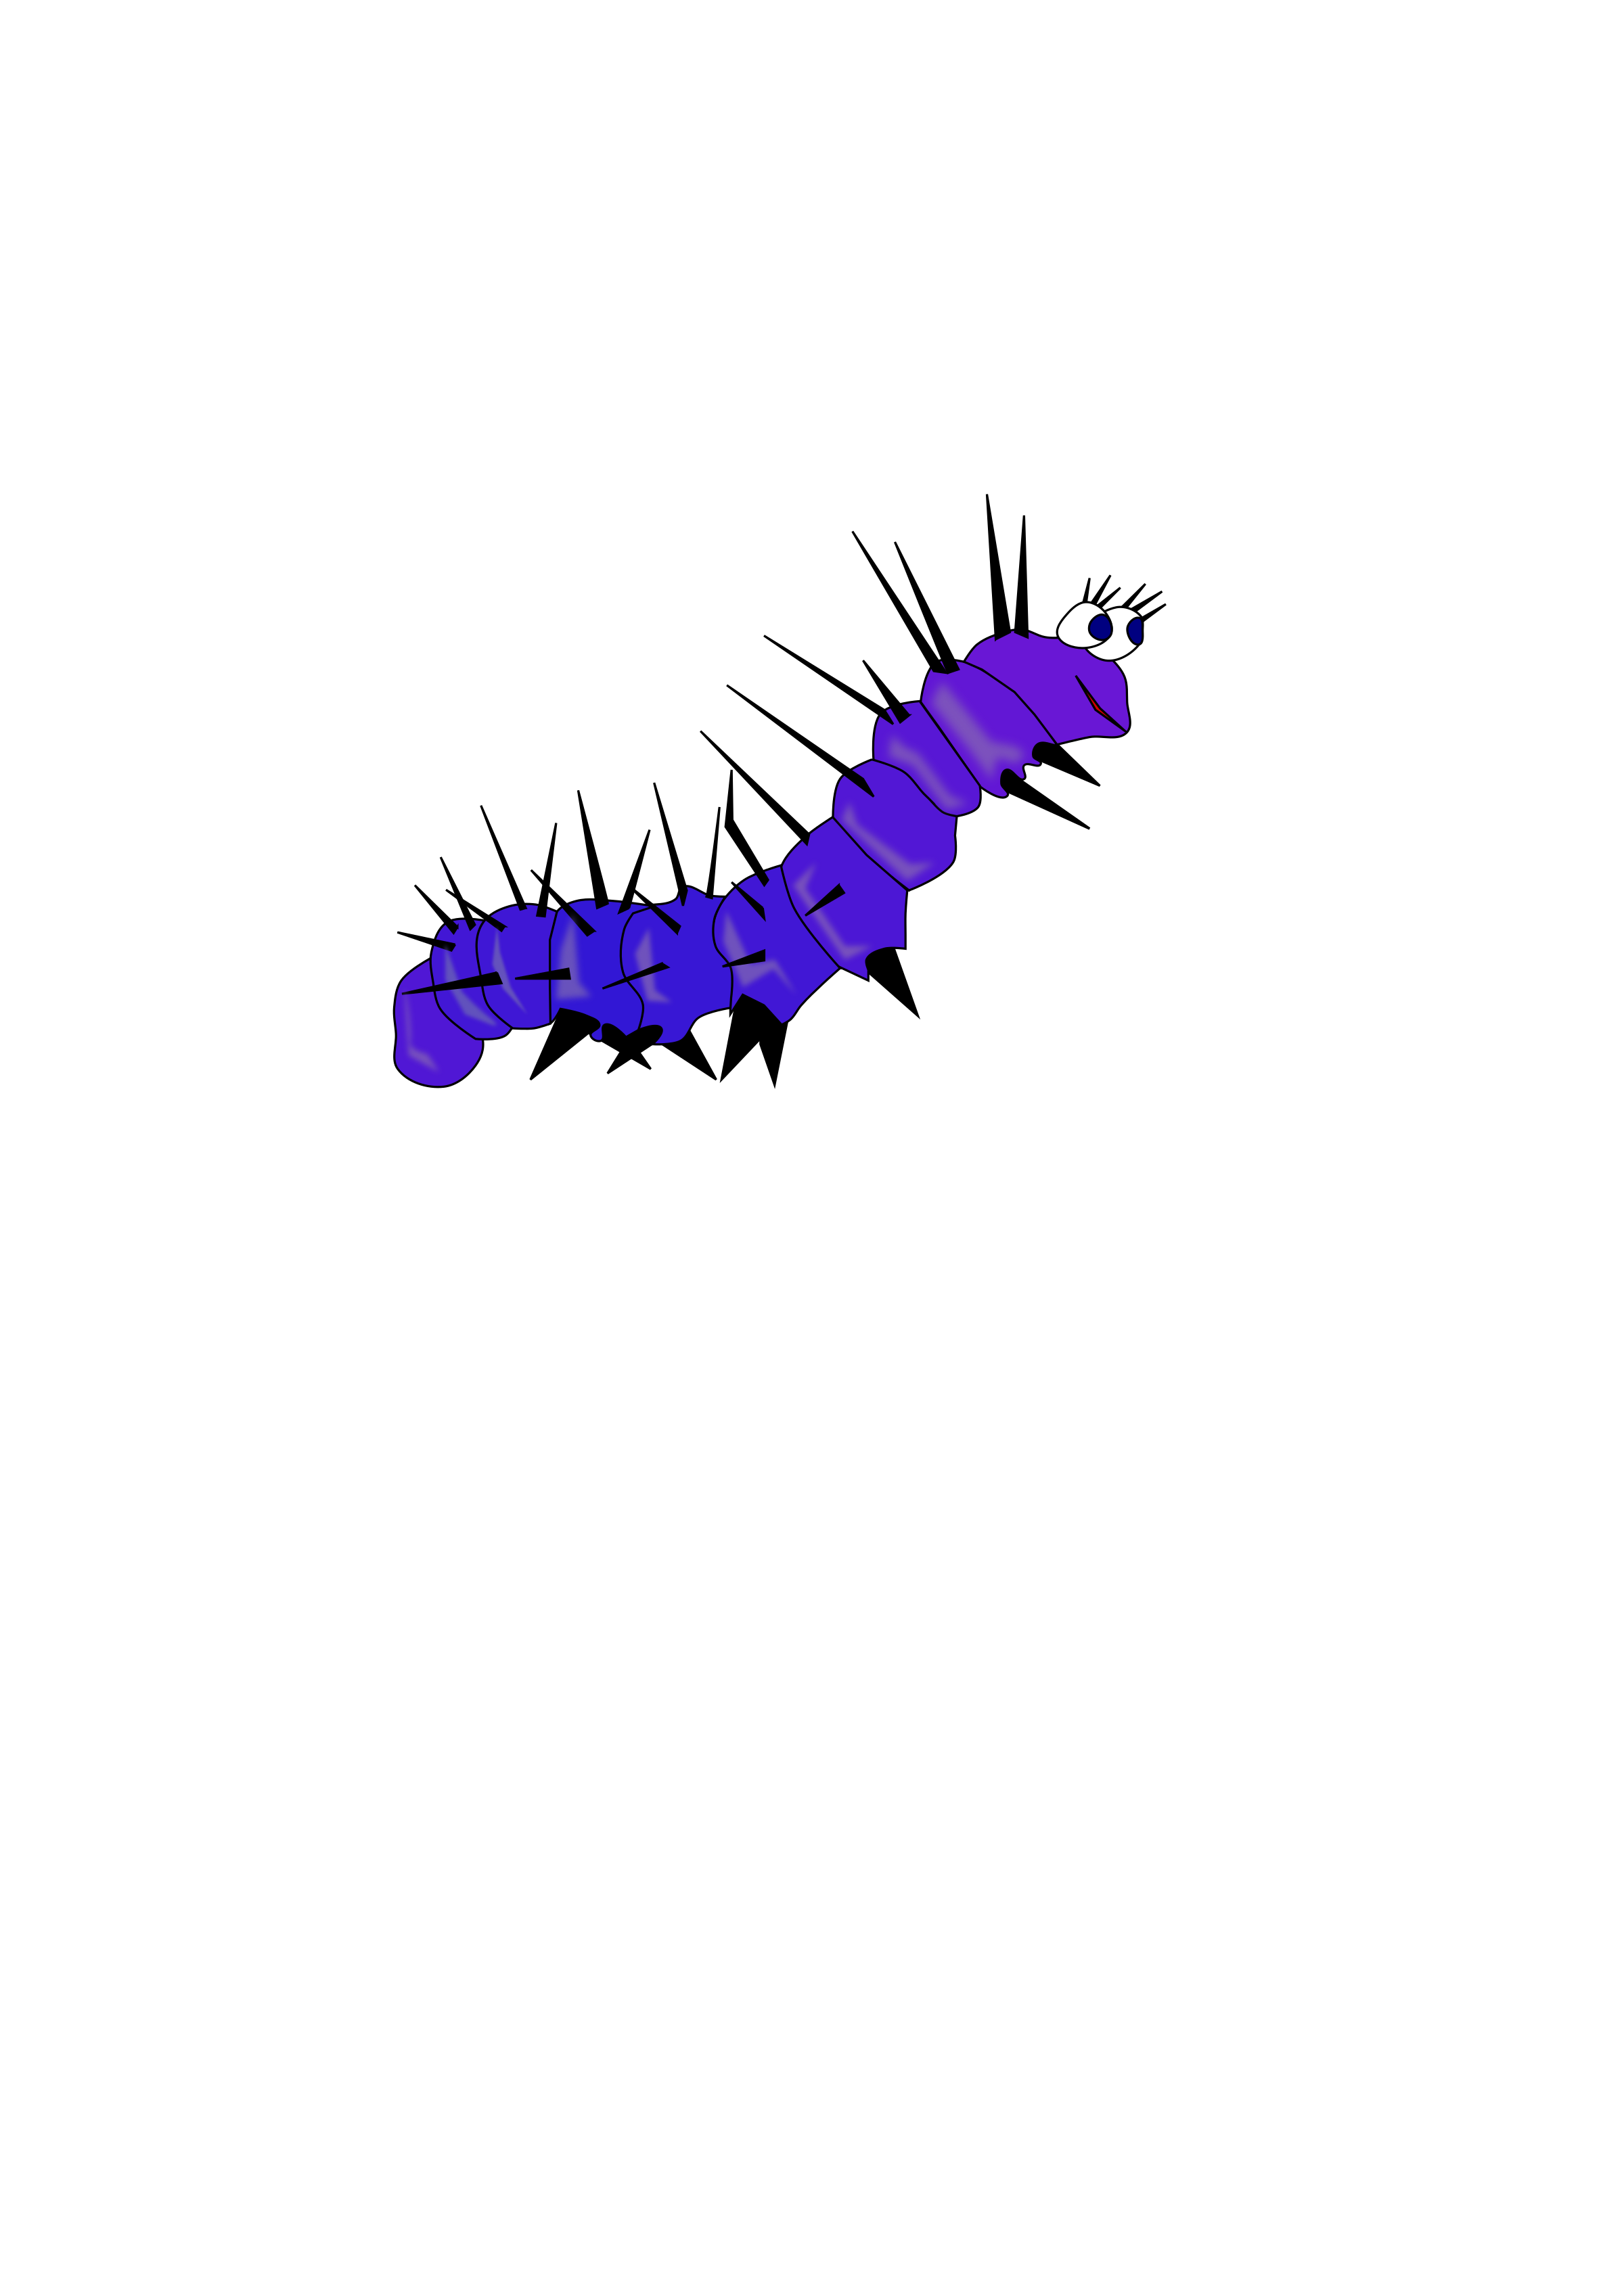 Caterpillar gusano big image. Worm clipart purple animal